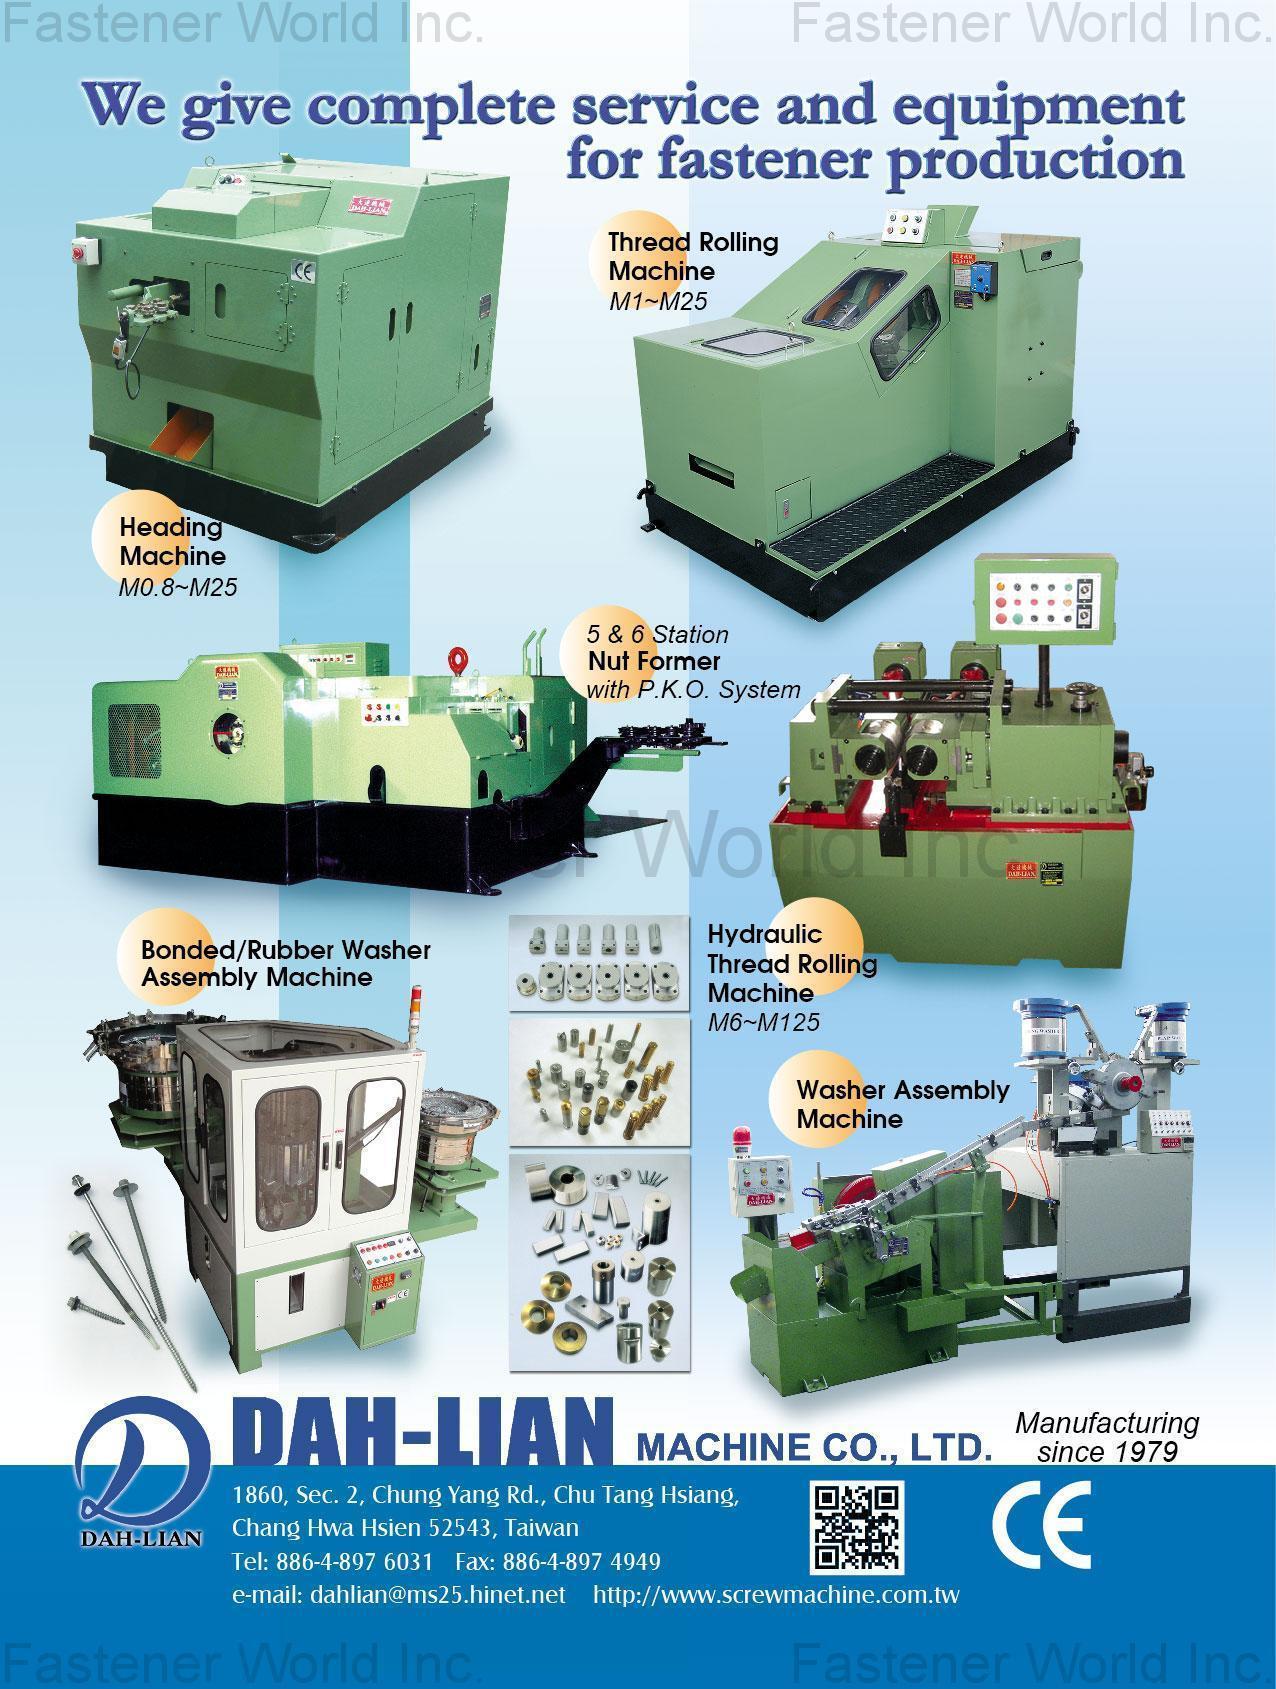 DAH-LIAN MACHINE CO., LTD  , Heading Machine, Thread Rolling Machine, Nut Former, Bonded/Rubber Washer Assembly Machine, Hydraulic Thread Rolling Machine, Washer Assembly Machine